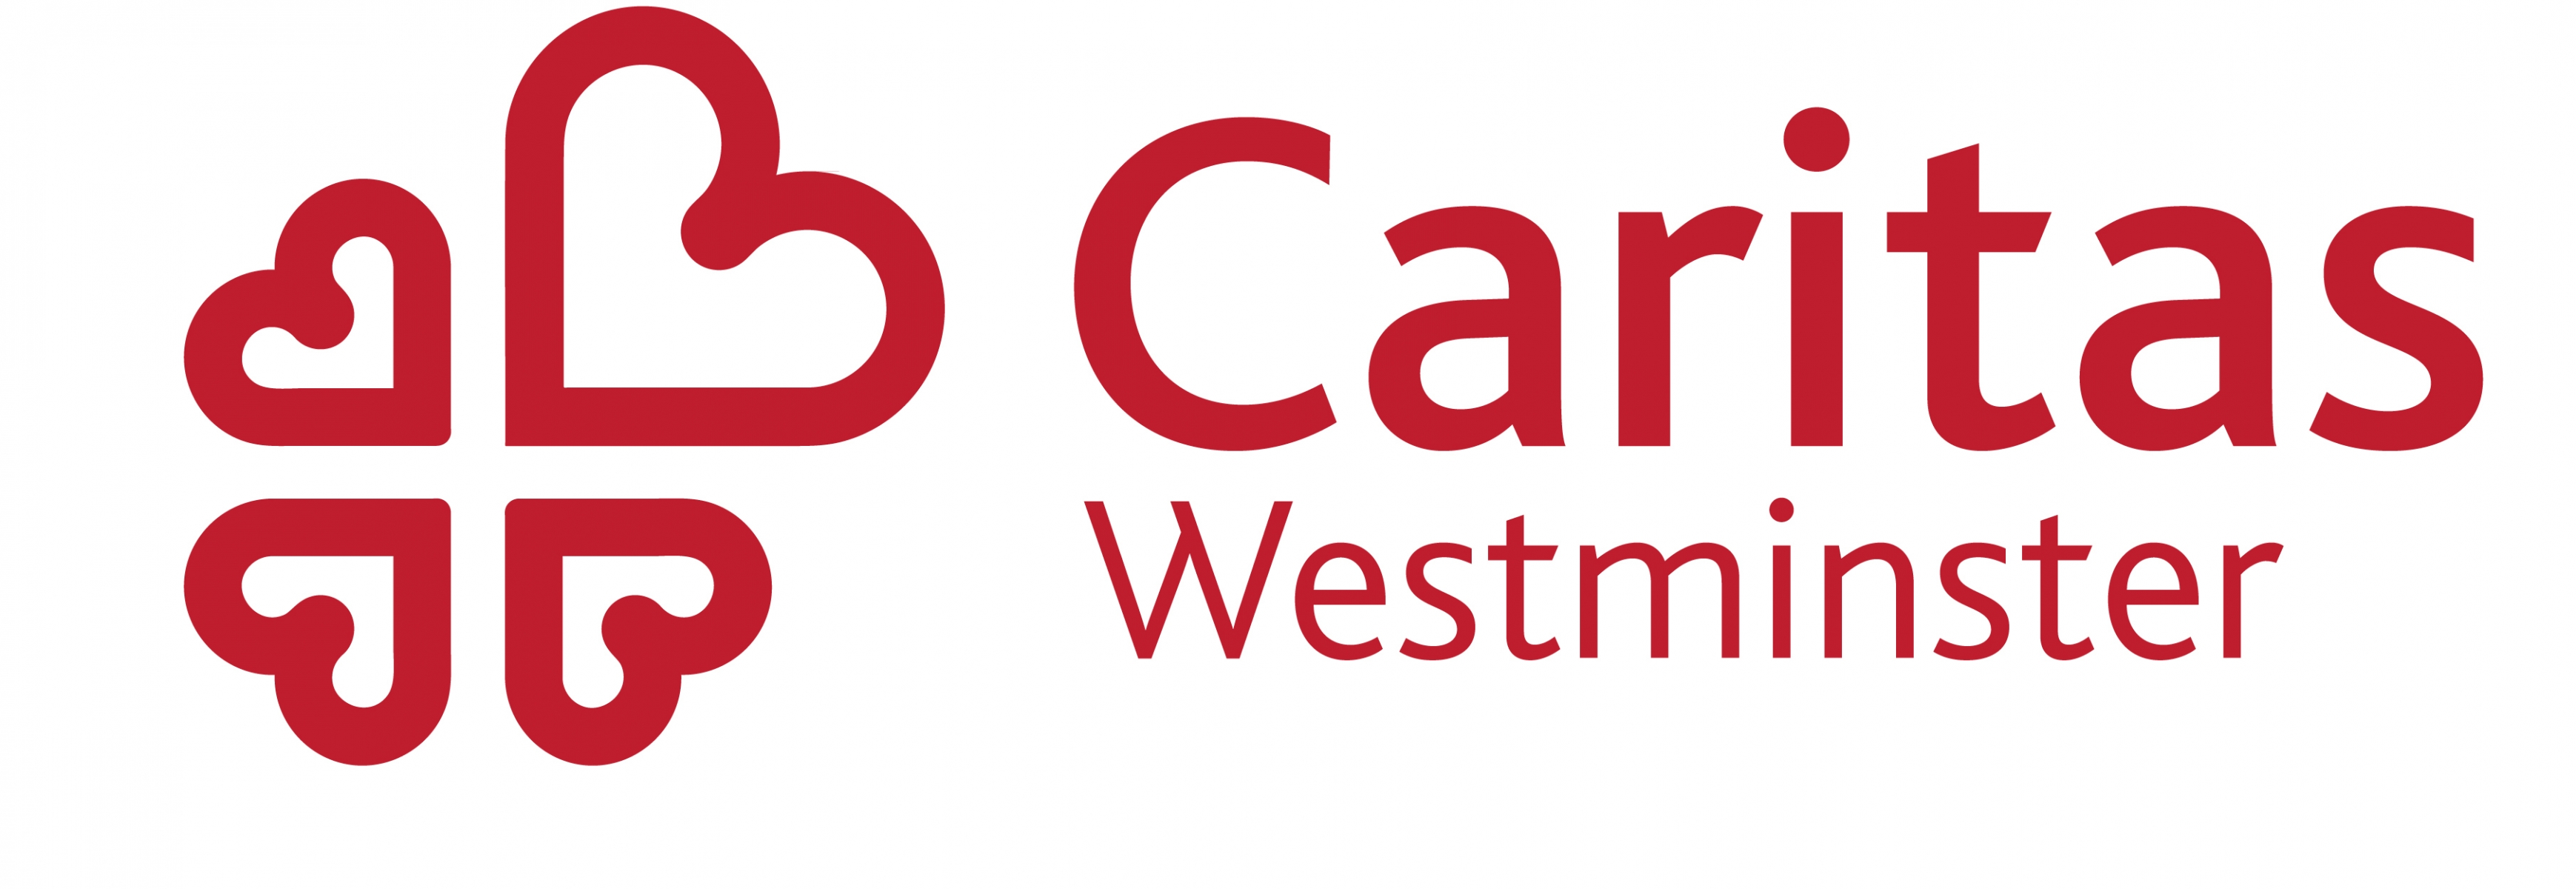 Caritas Westminster eCards